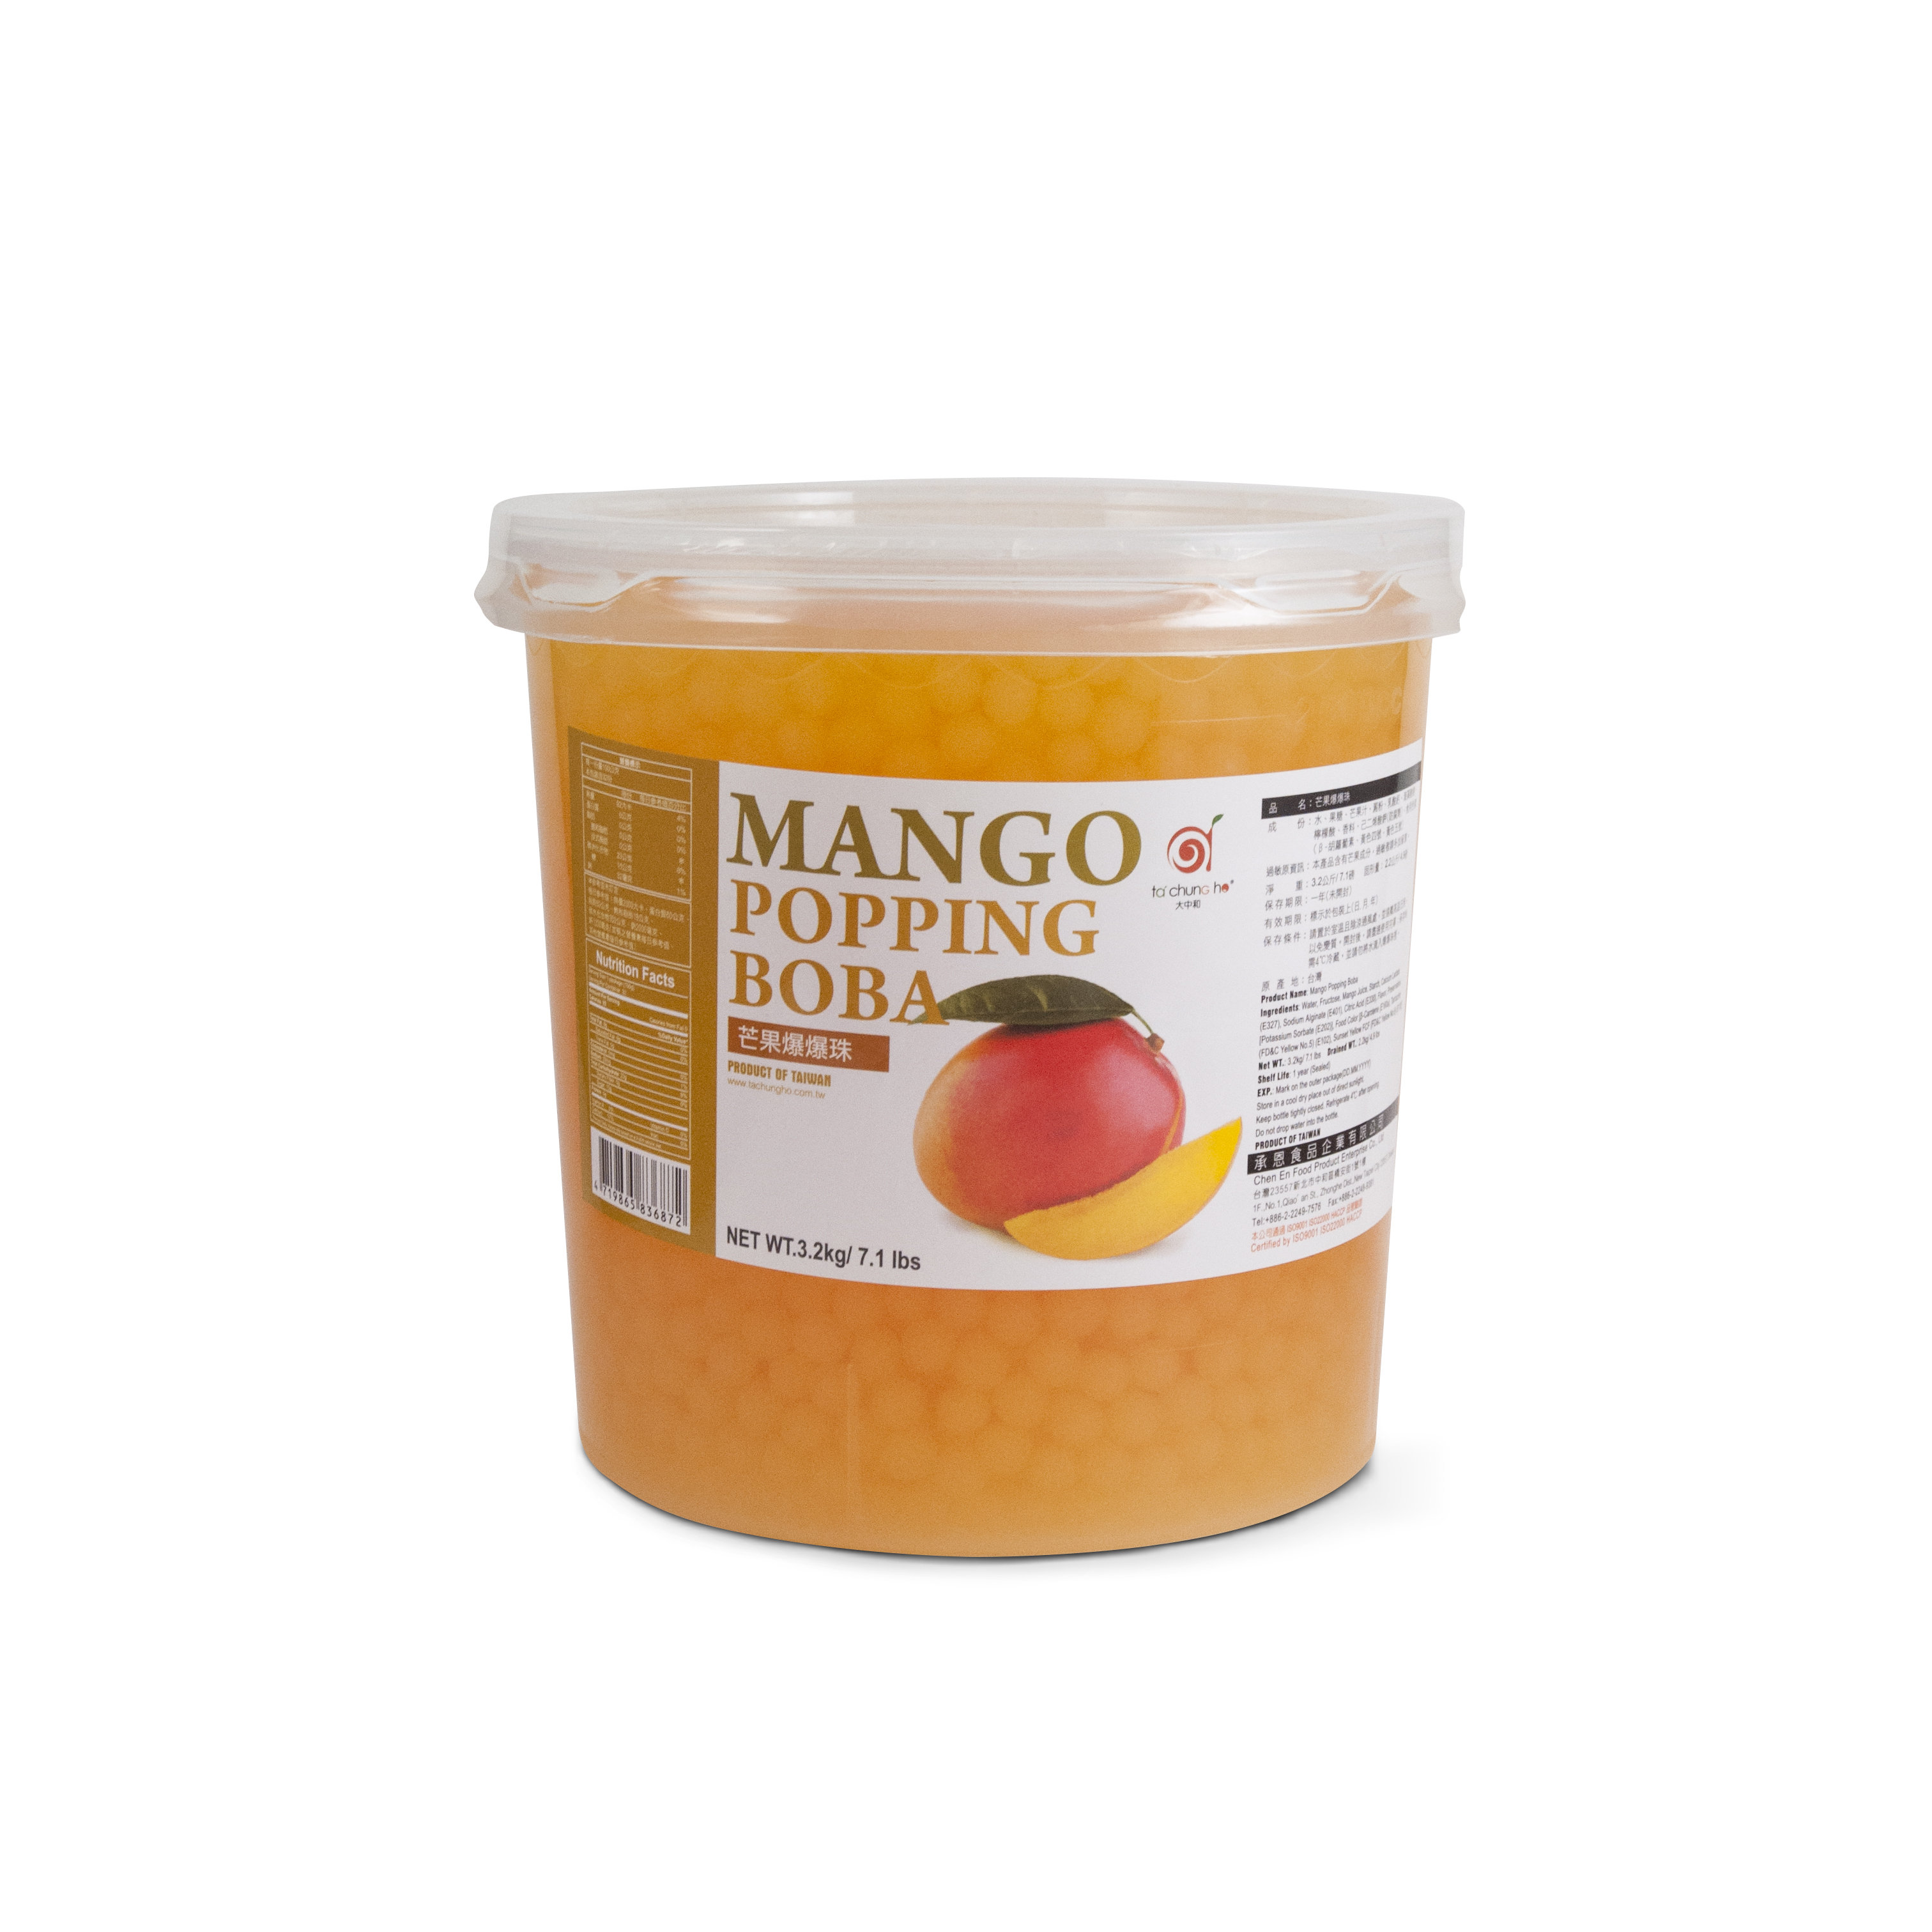 Mango Popping Boba Package